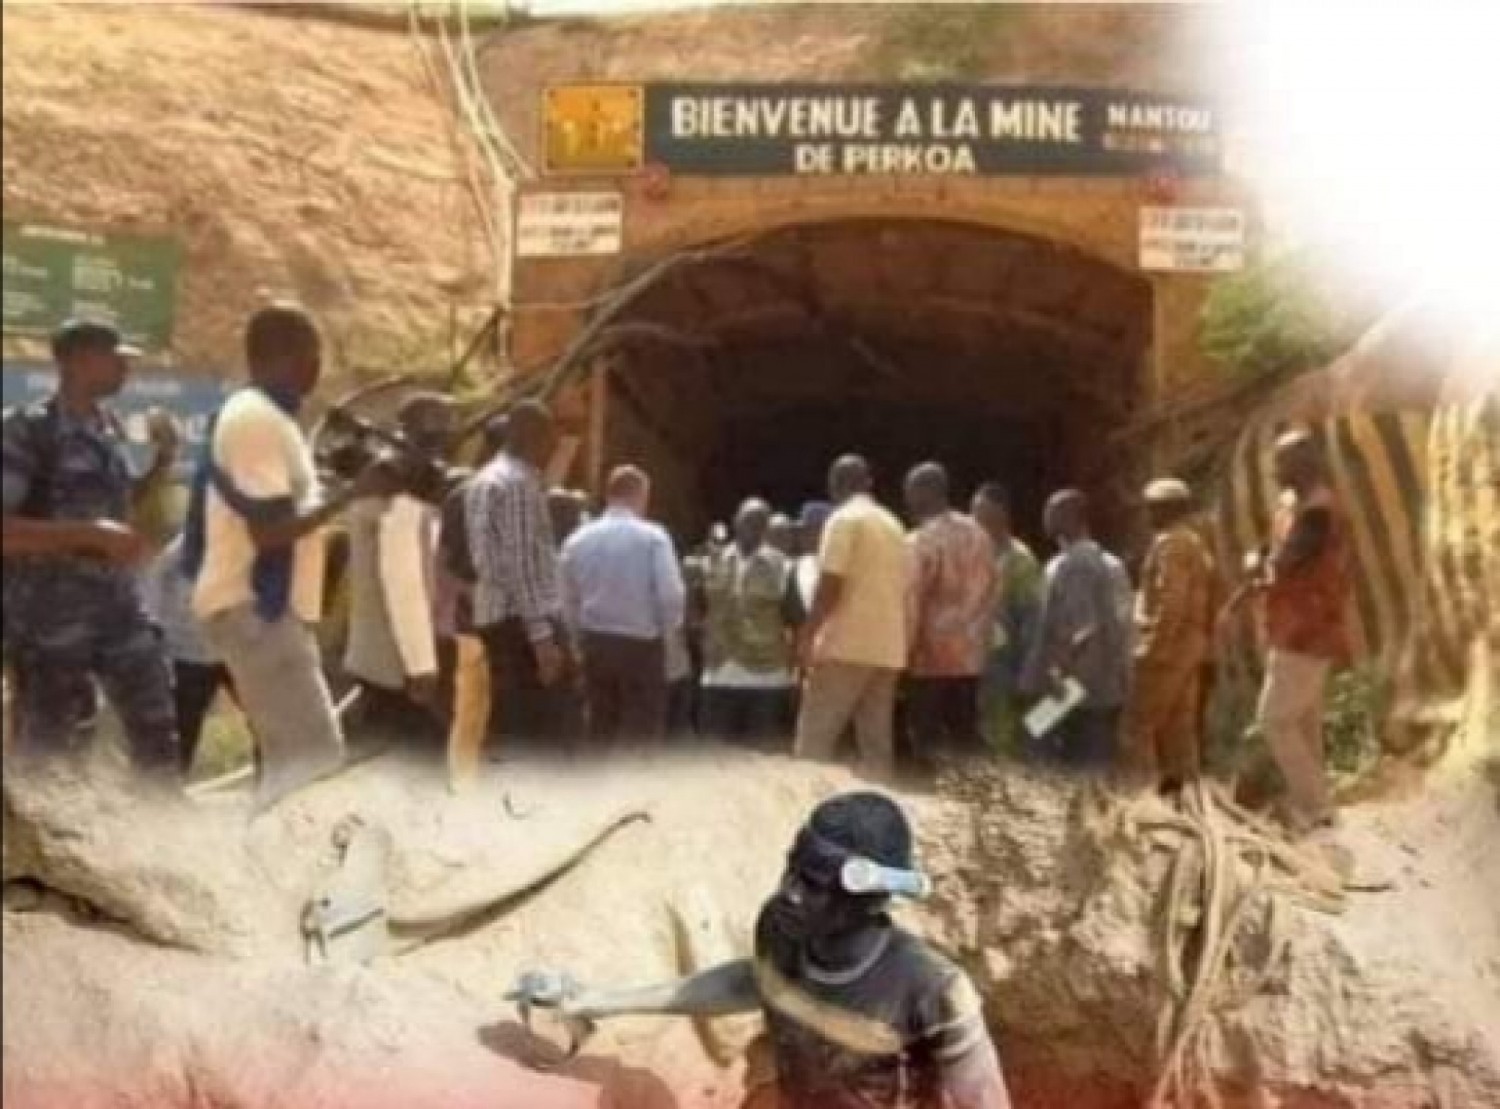 Burkina Faso : Mine de Perkoa, le dernier corps retrouvé